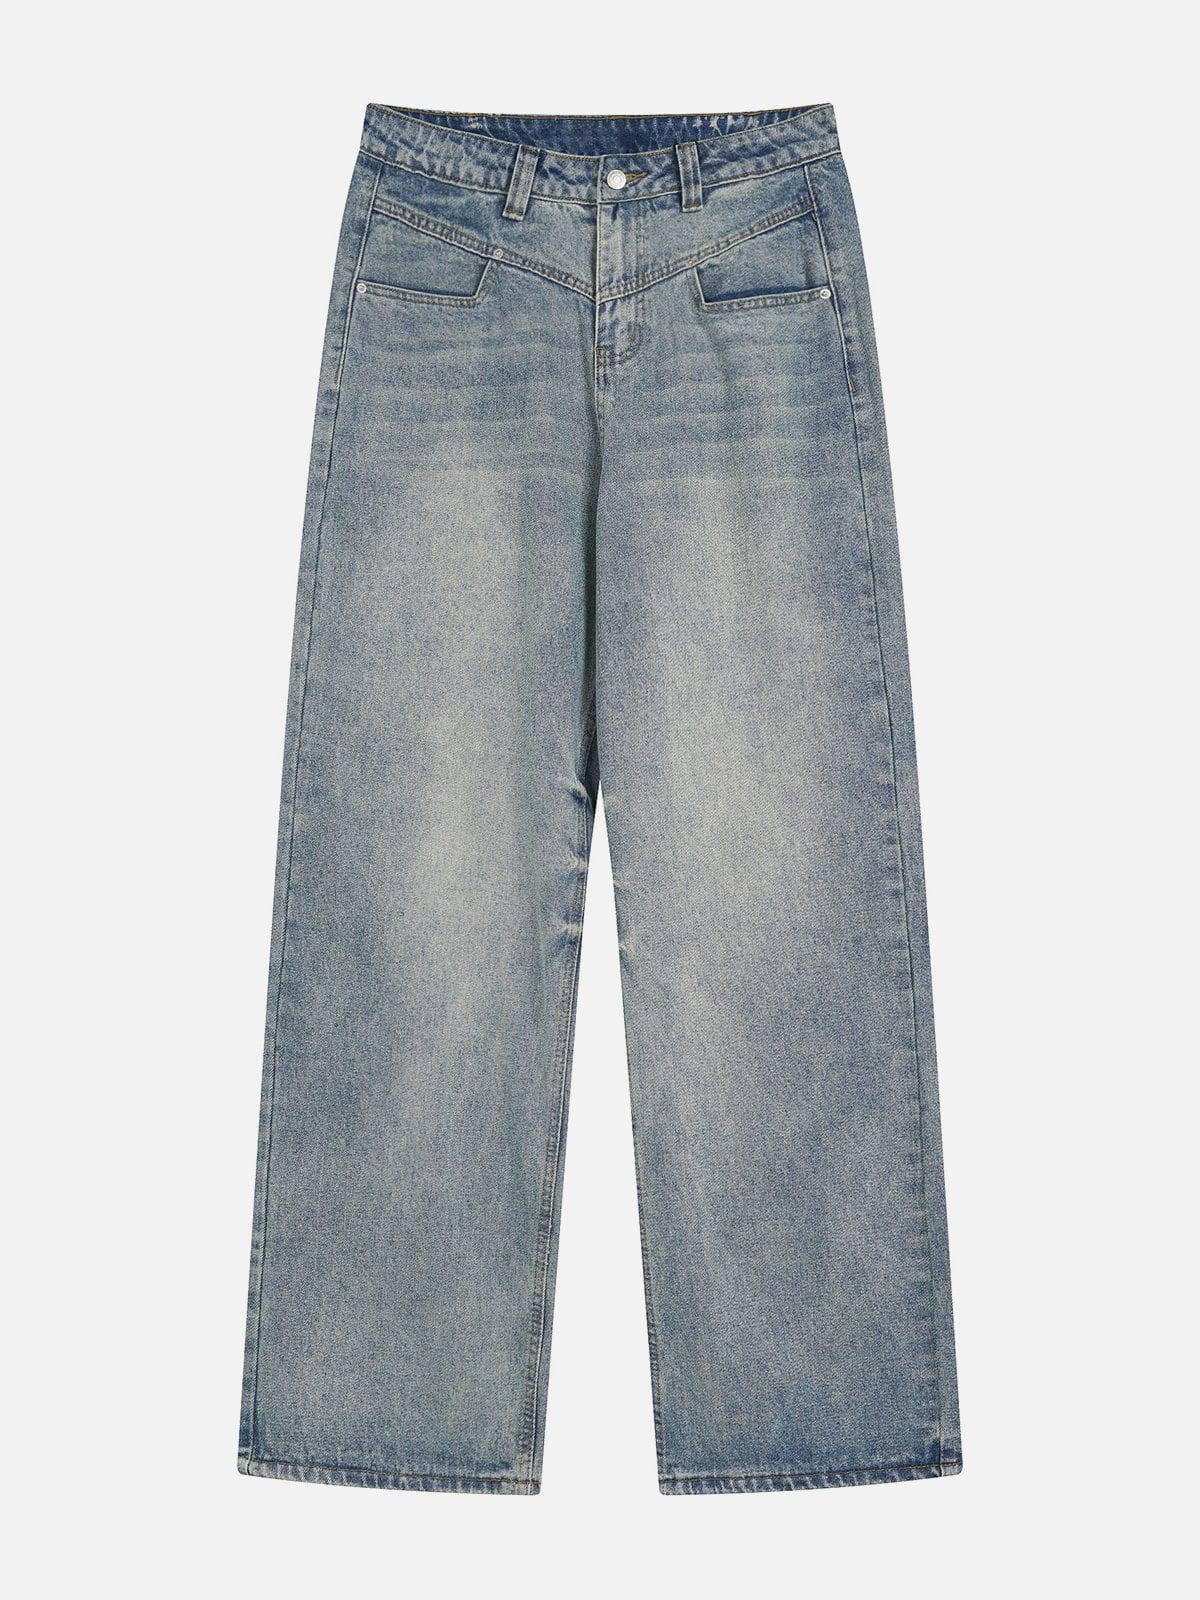 Aelfric Eden Asymmetrical Pocket Jeans